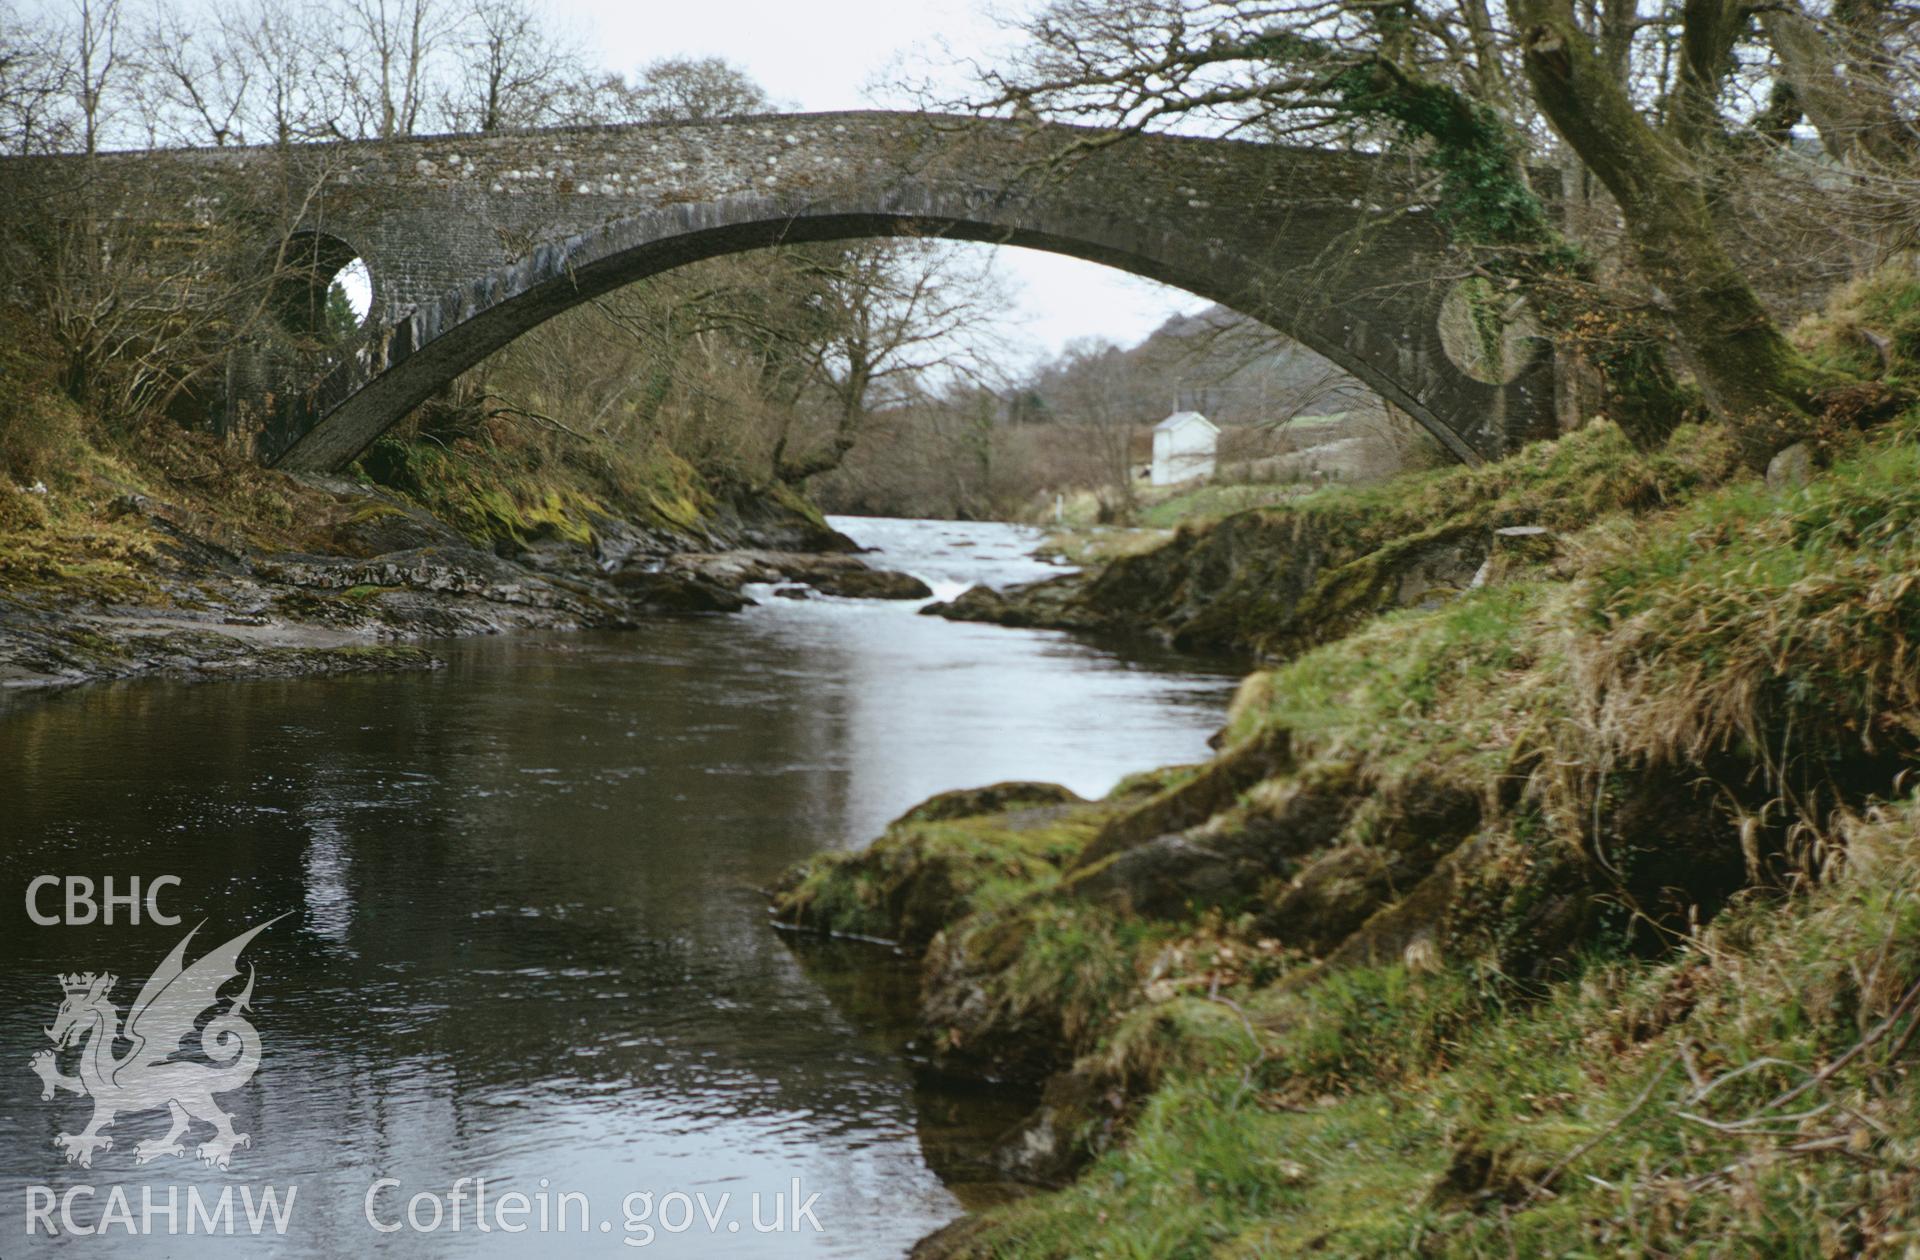 35mm colour slide showing Dolauhirion Road Bridge, near Llandovery, Carmarthenshire by Dylan Roberts.